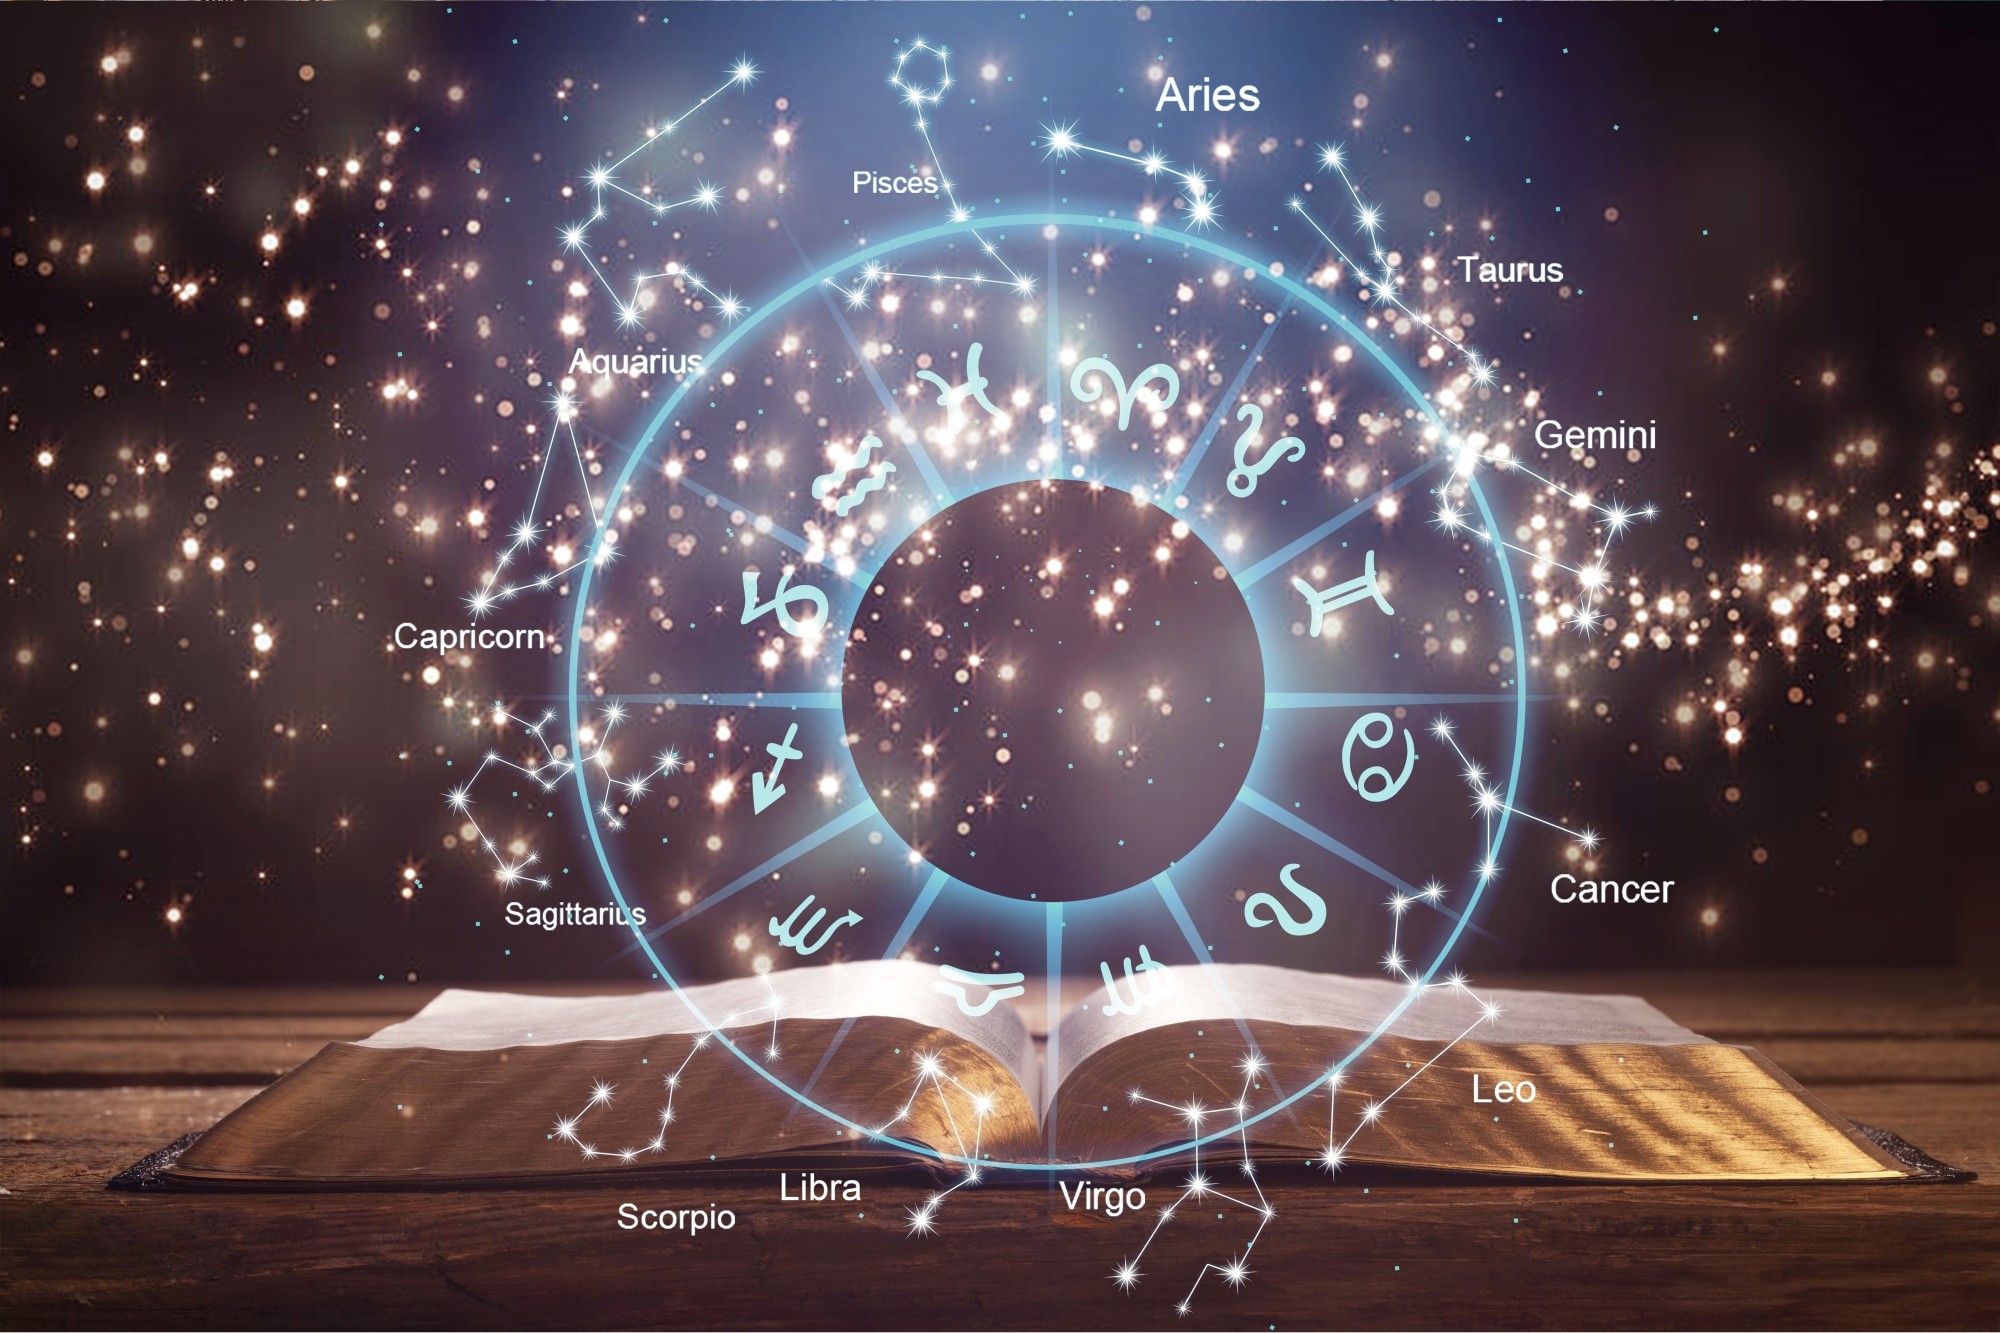 horoscope symbols over night sky